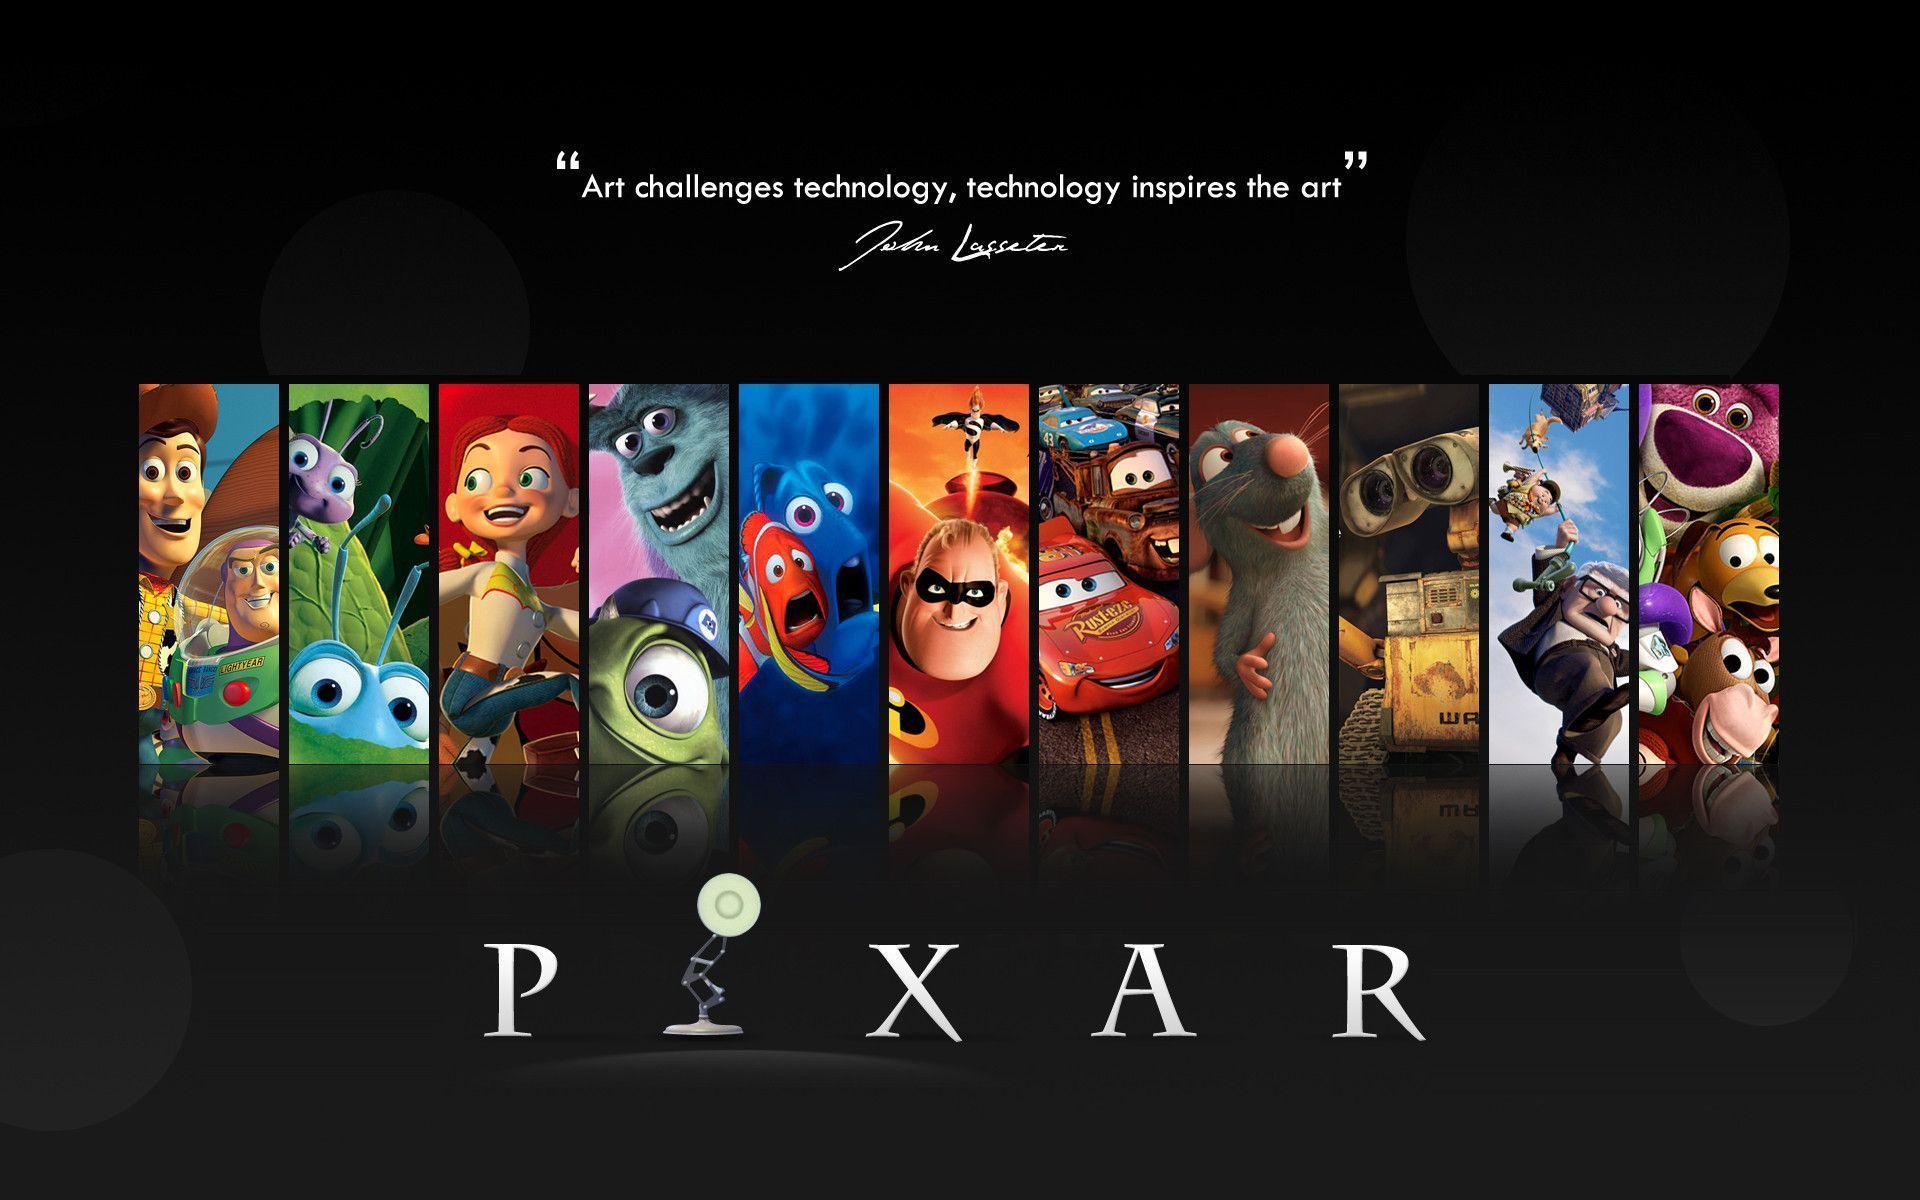 Pixar Taking on Dia de los Muertos With "Toy Story 3" Director